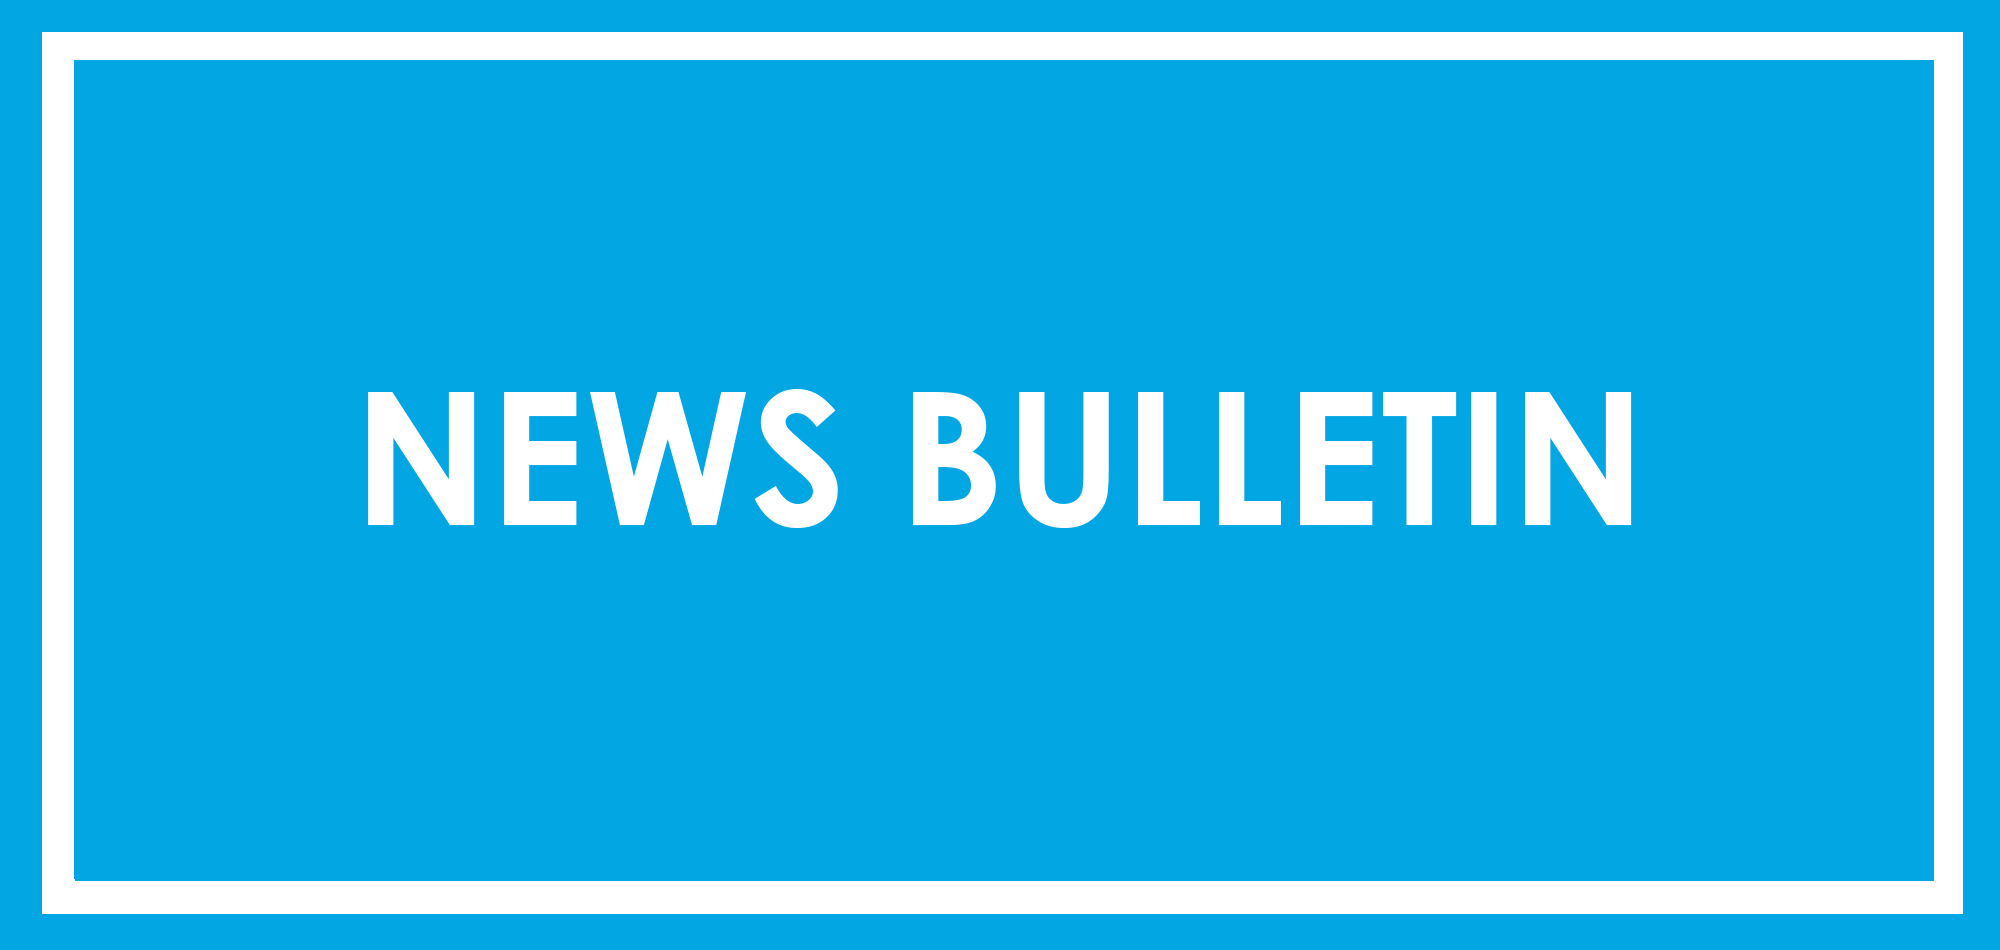 News Bulletin - 31.03.22